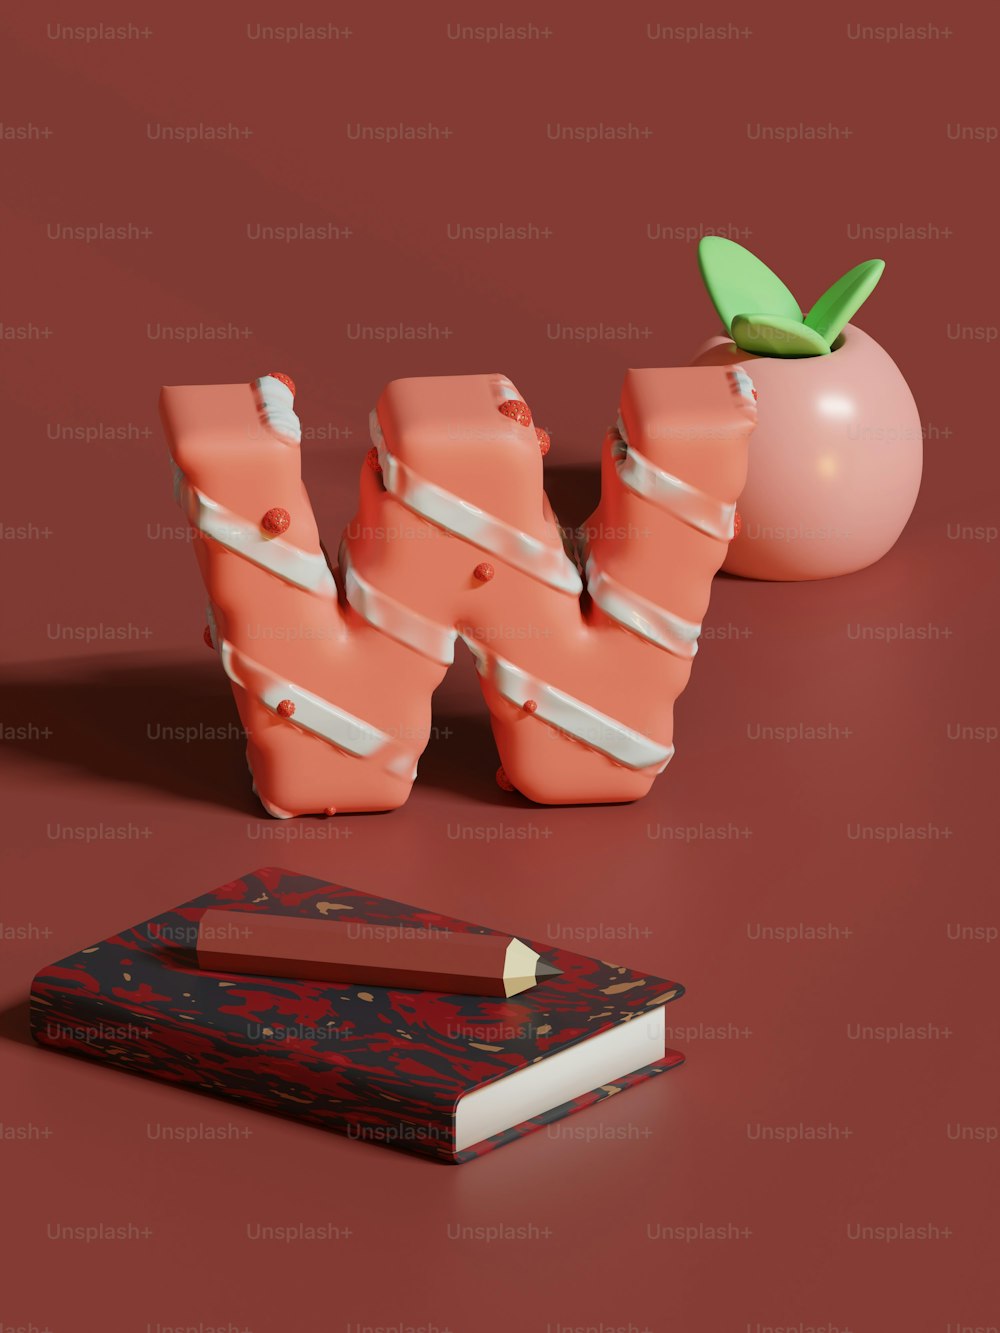 Un libro, una matita e una mela su una superficie rossa